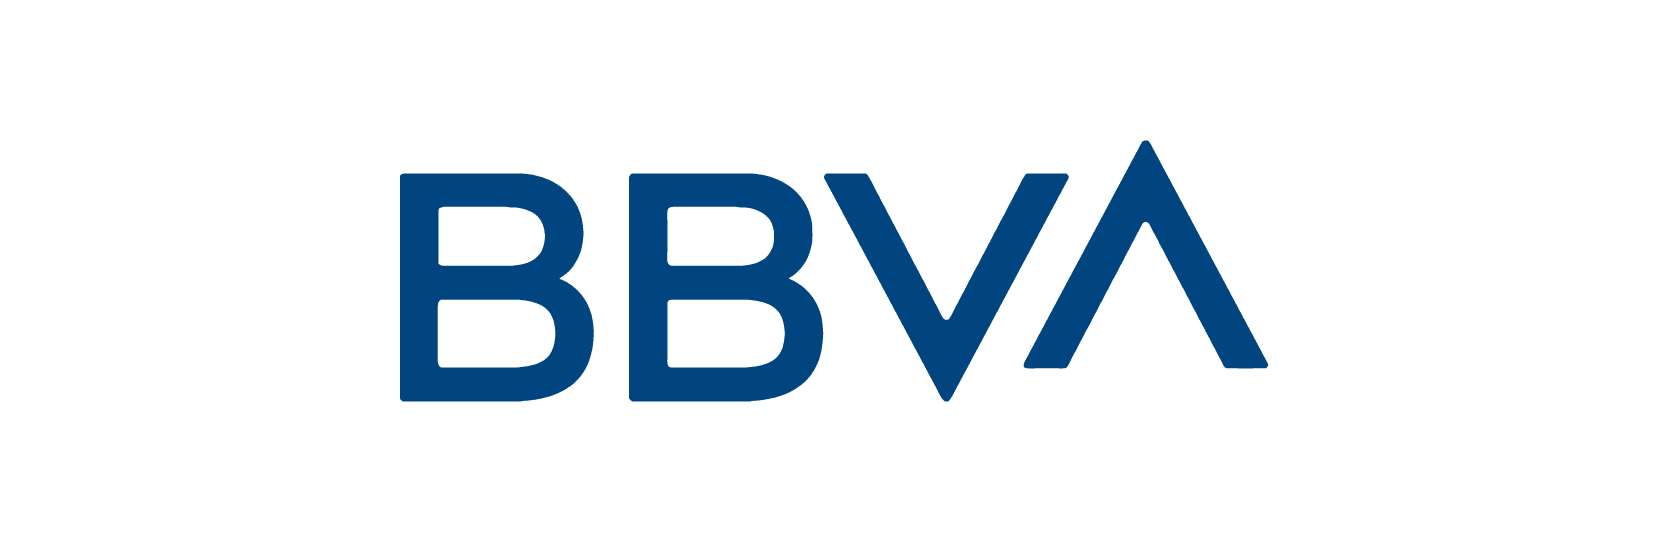 Logos-bbva